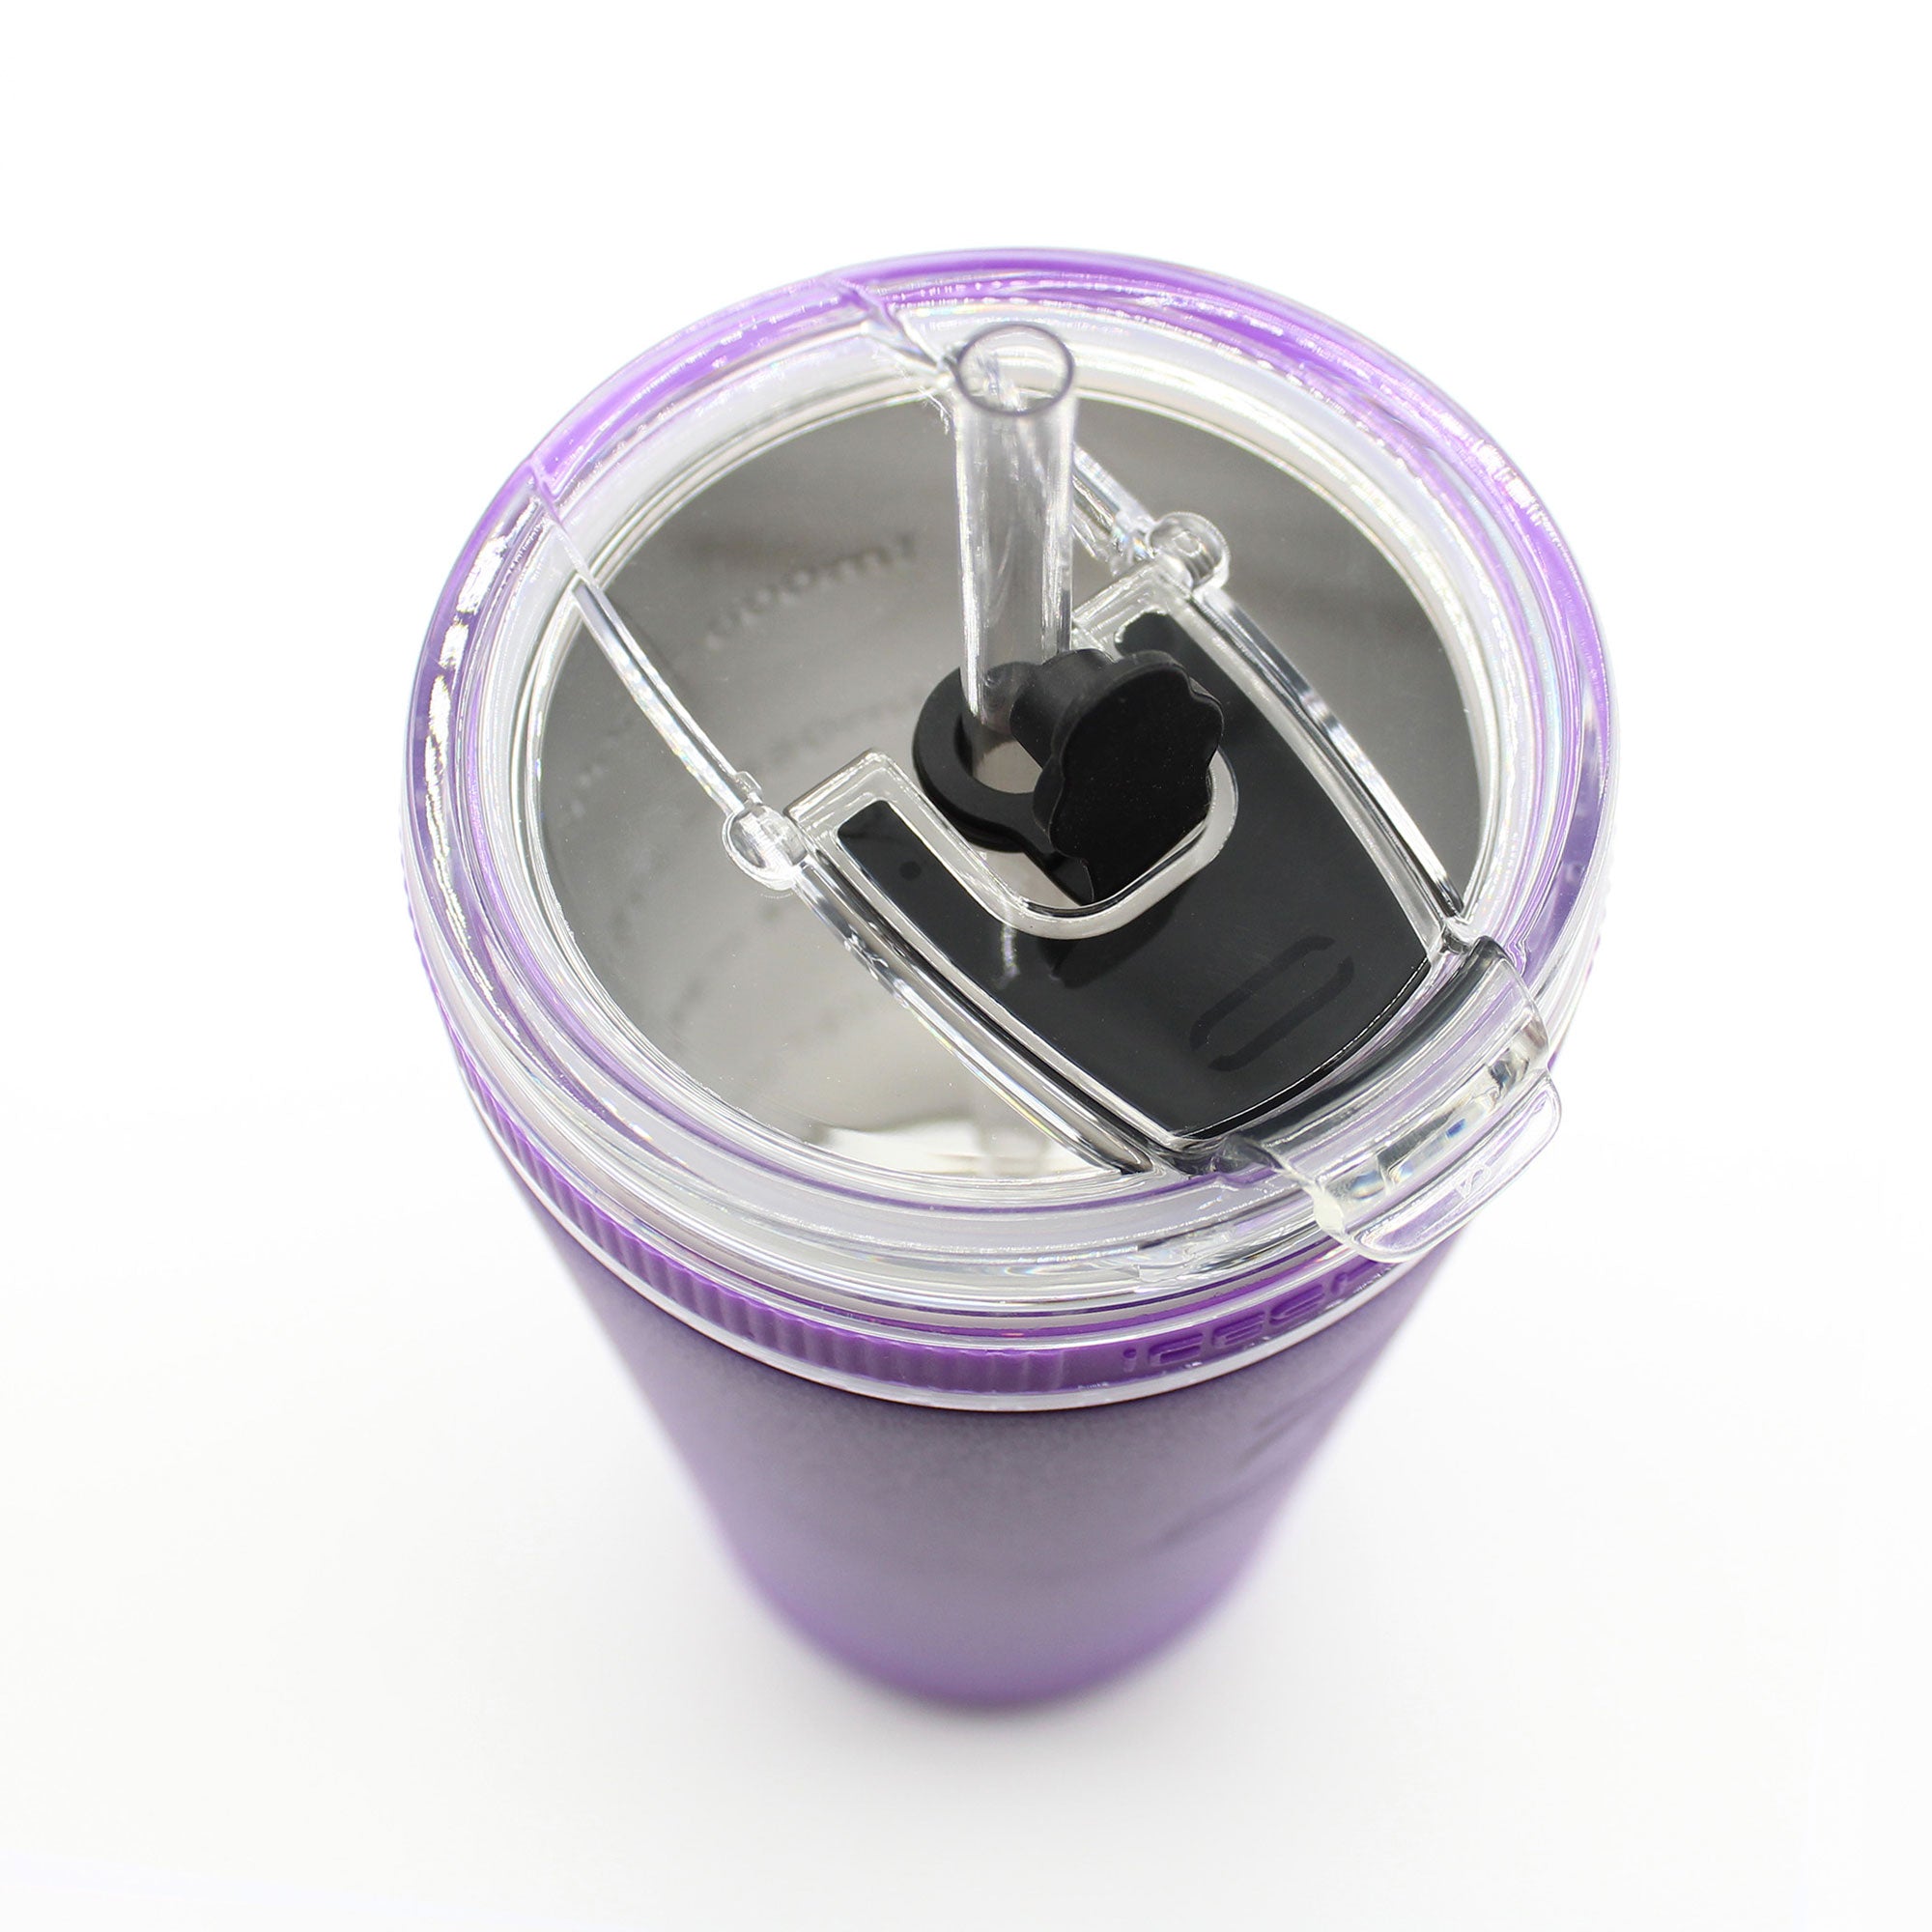 26oz Flex Bottle - Purple